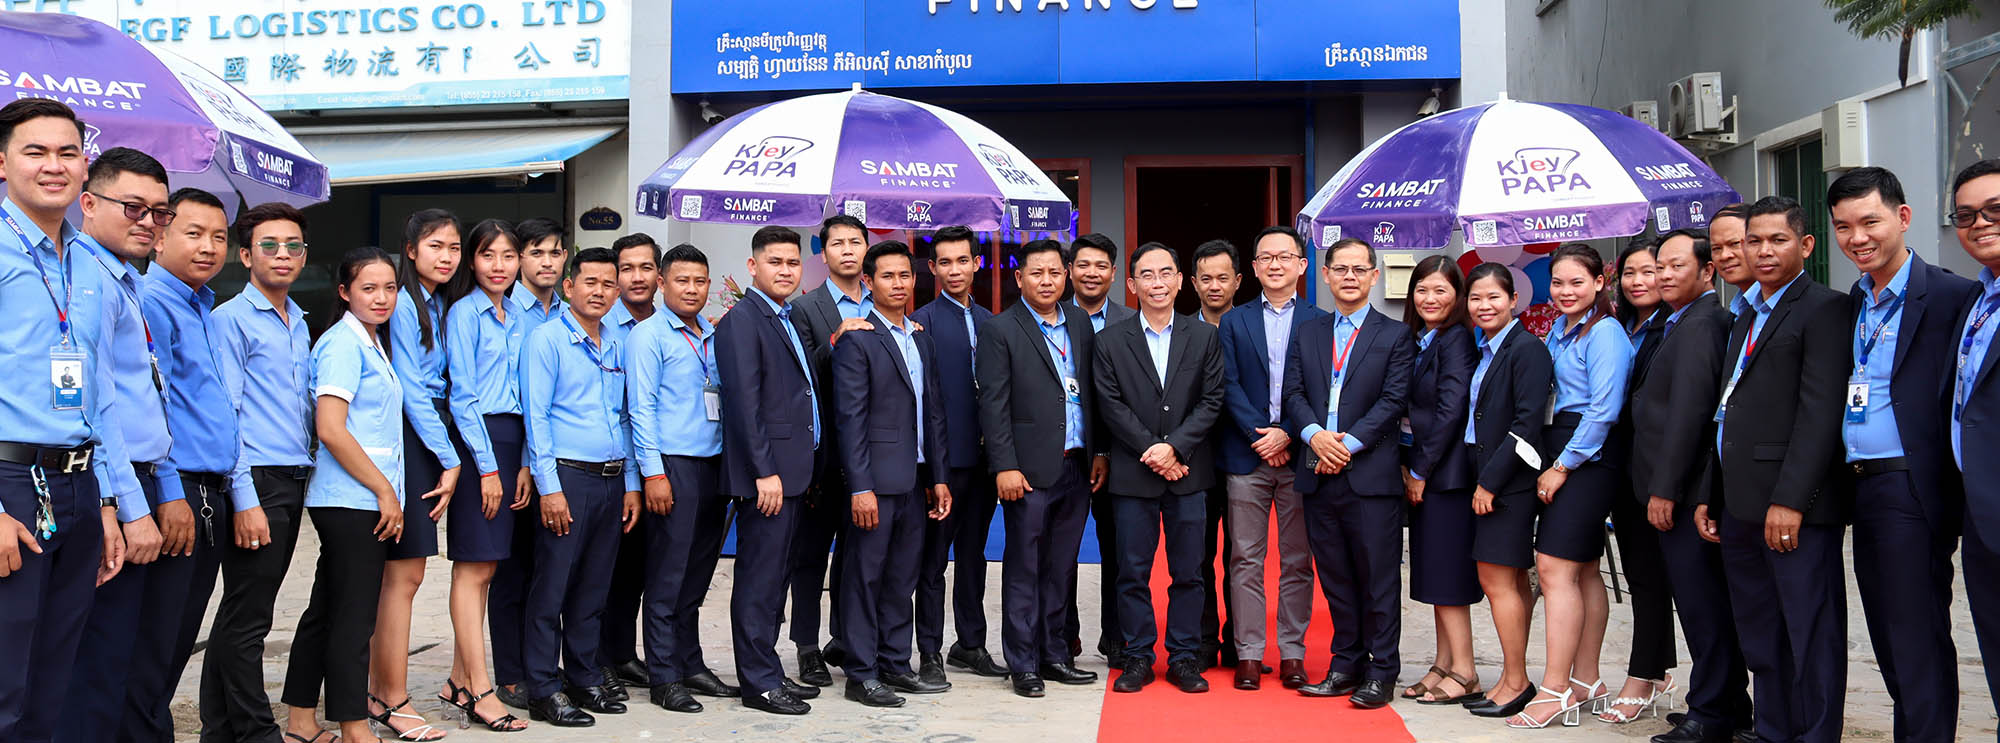 Financing for All Cambodians | Sambat Finance